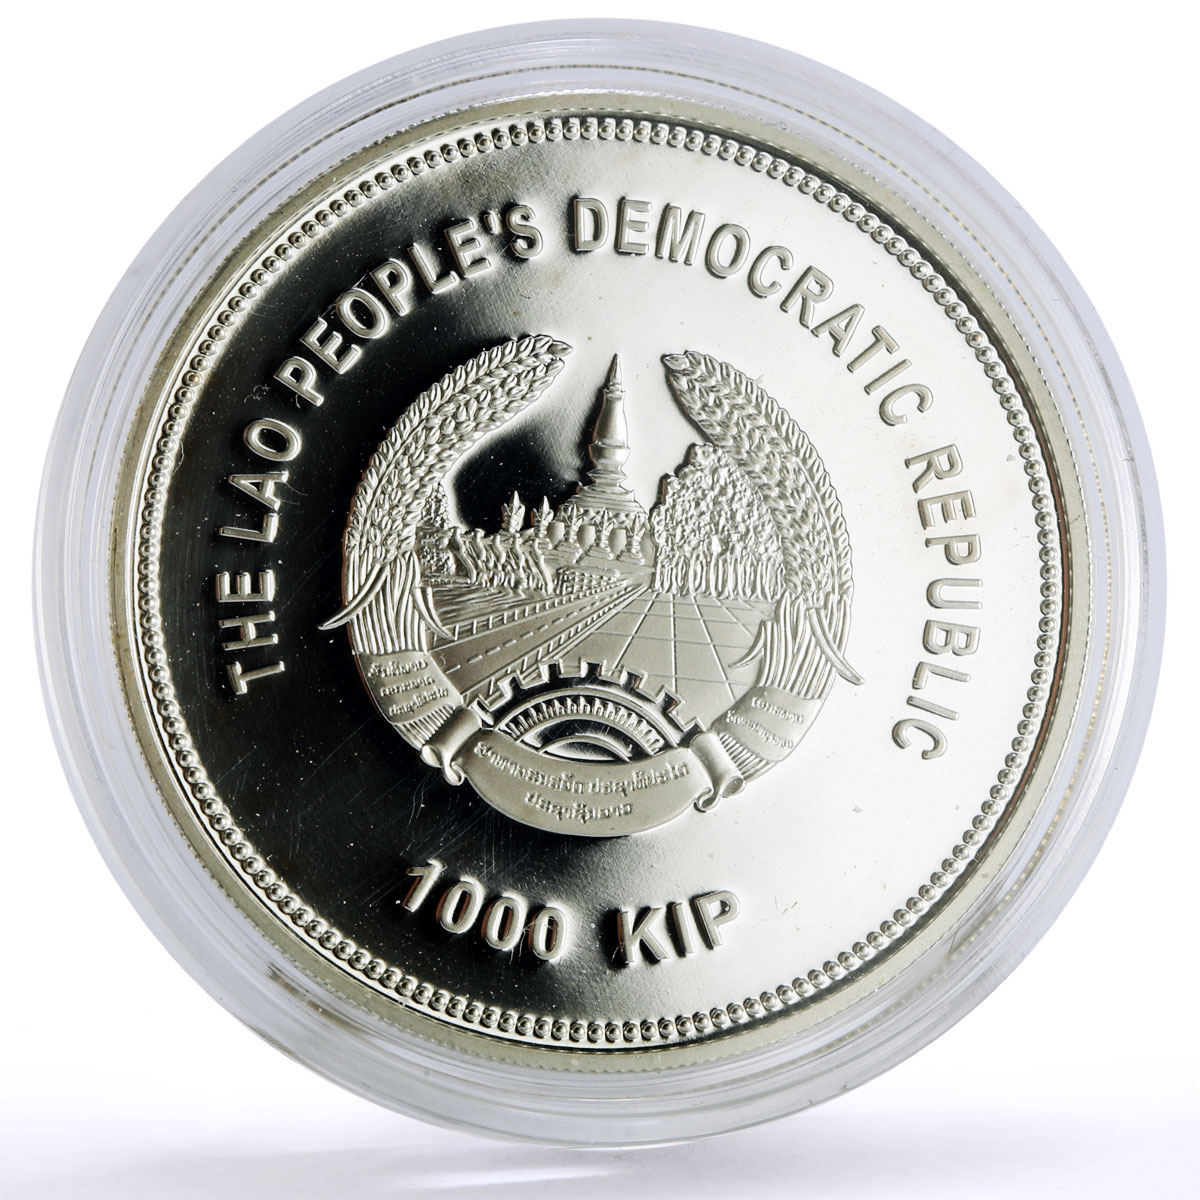 Laos 1000 kip Lunar Calendar Year of the Dragon colored proof silver coin 2012